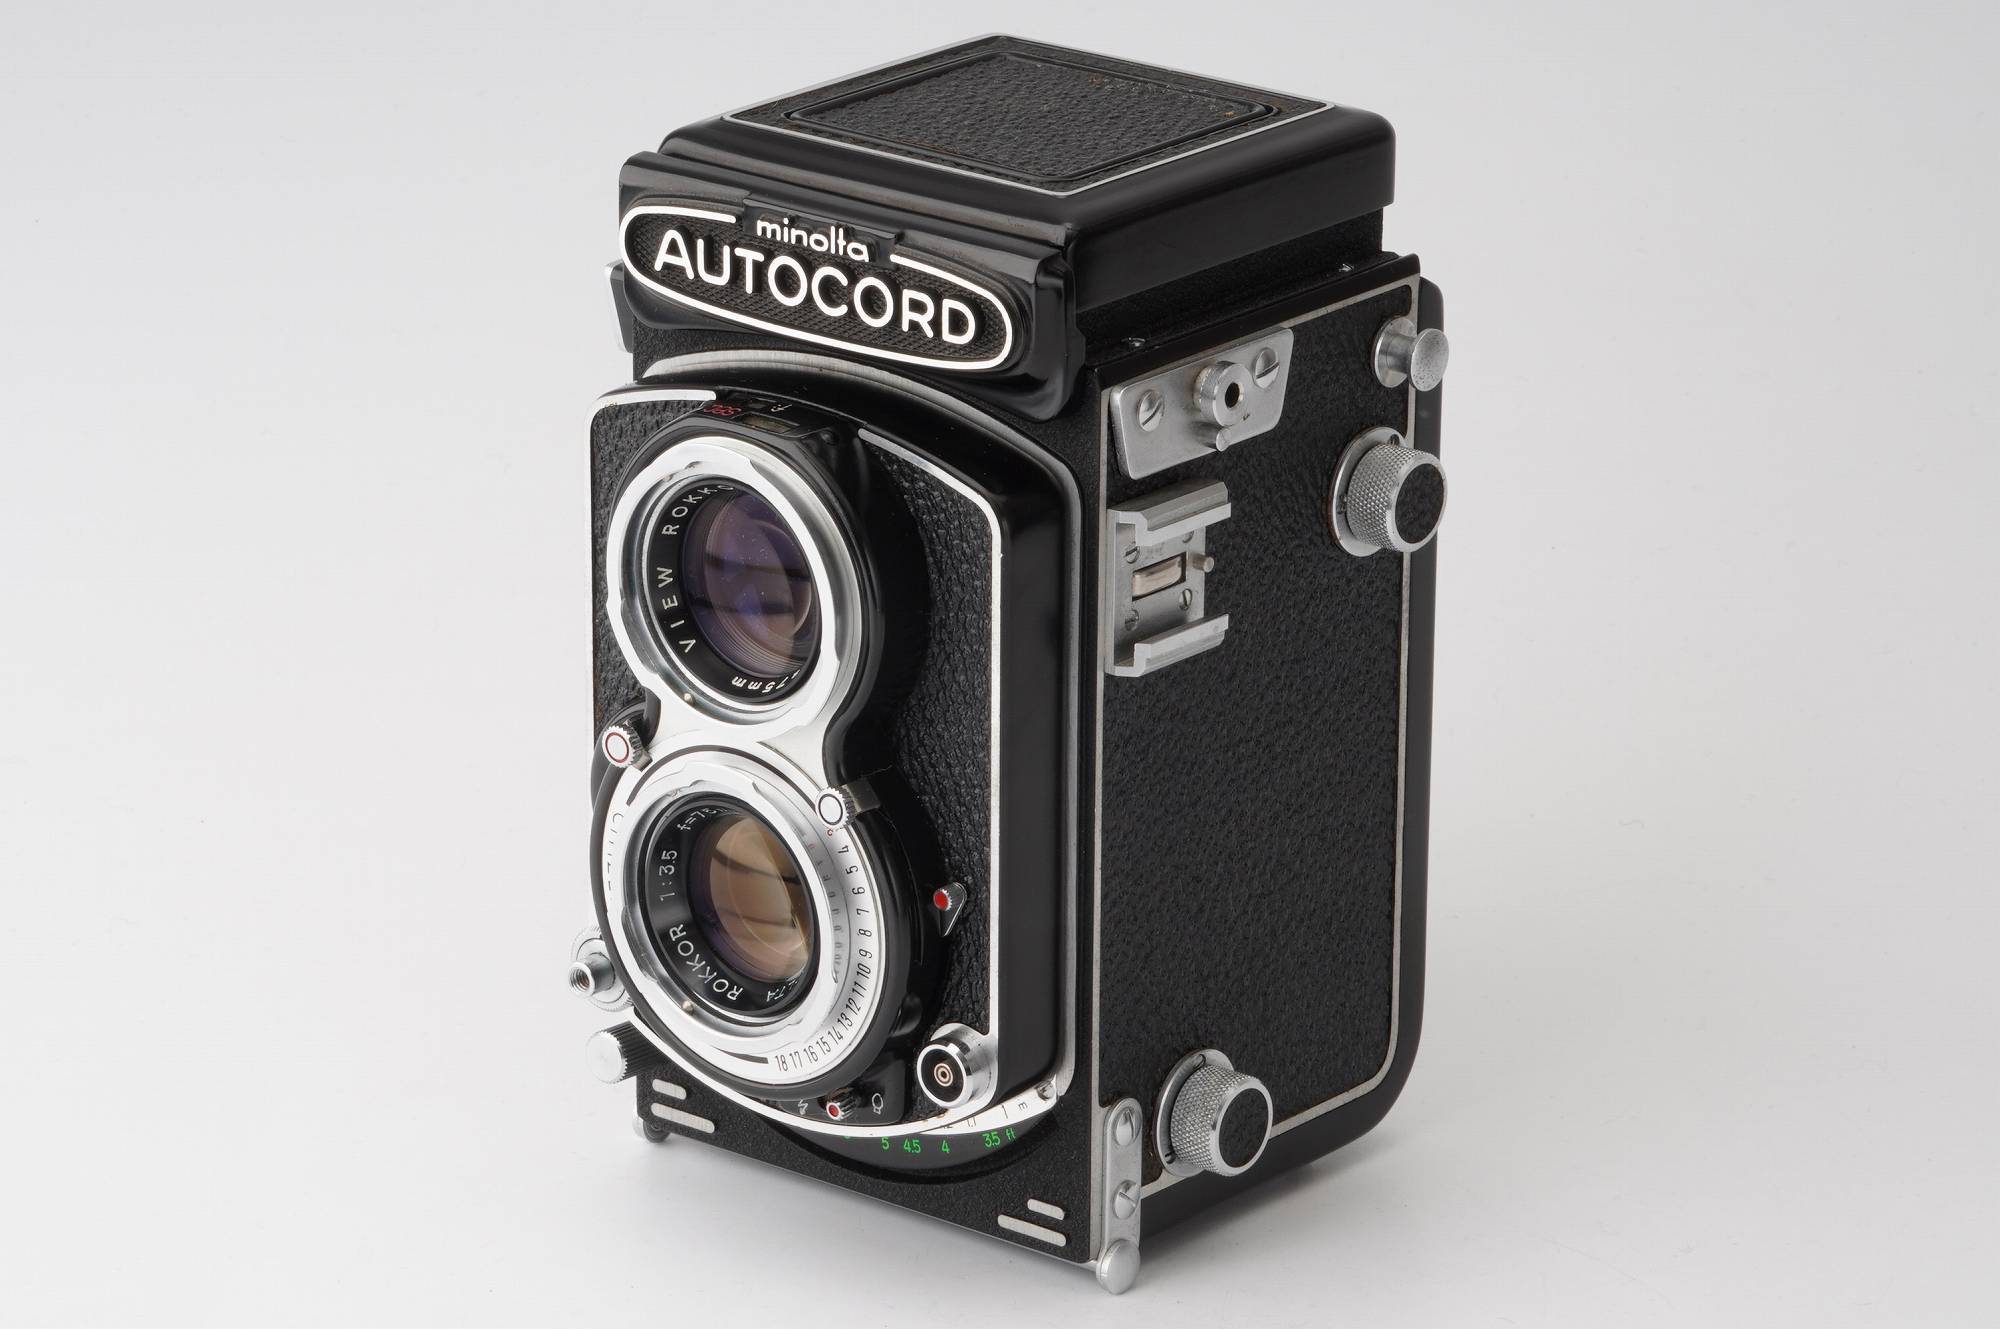 Minolta AUTOCORD III フィルムカメラ本体と付属品 - フィルムカメラ